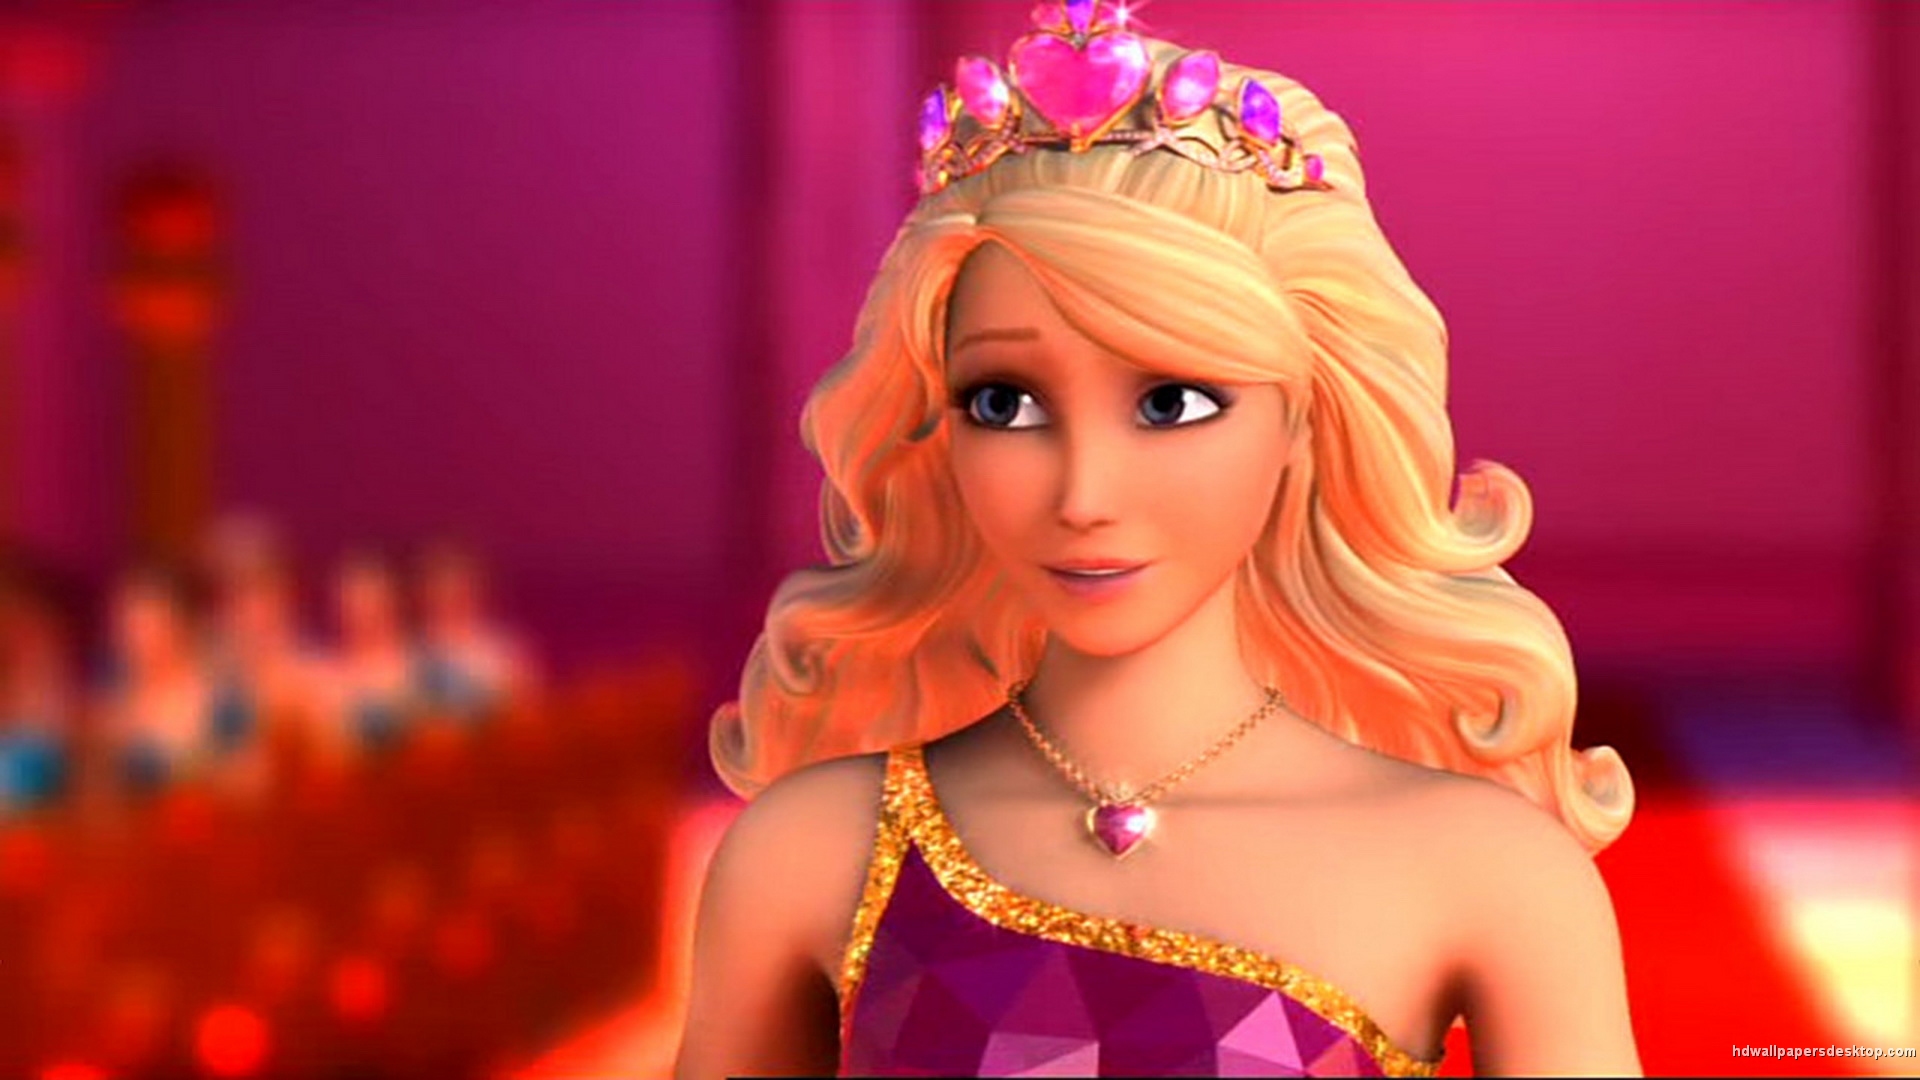 barbie wallpaper princess - HD Desktop Wallpapers | 4k HD